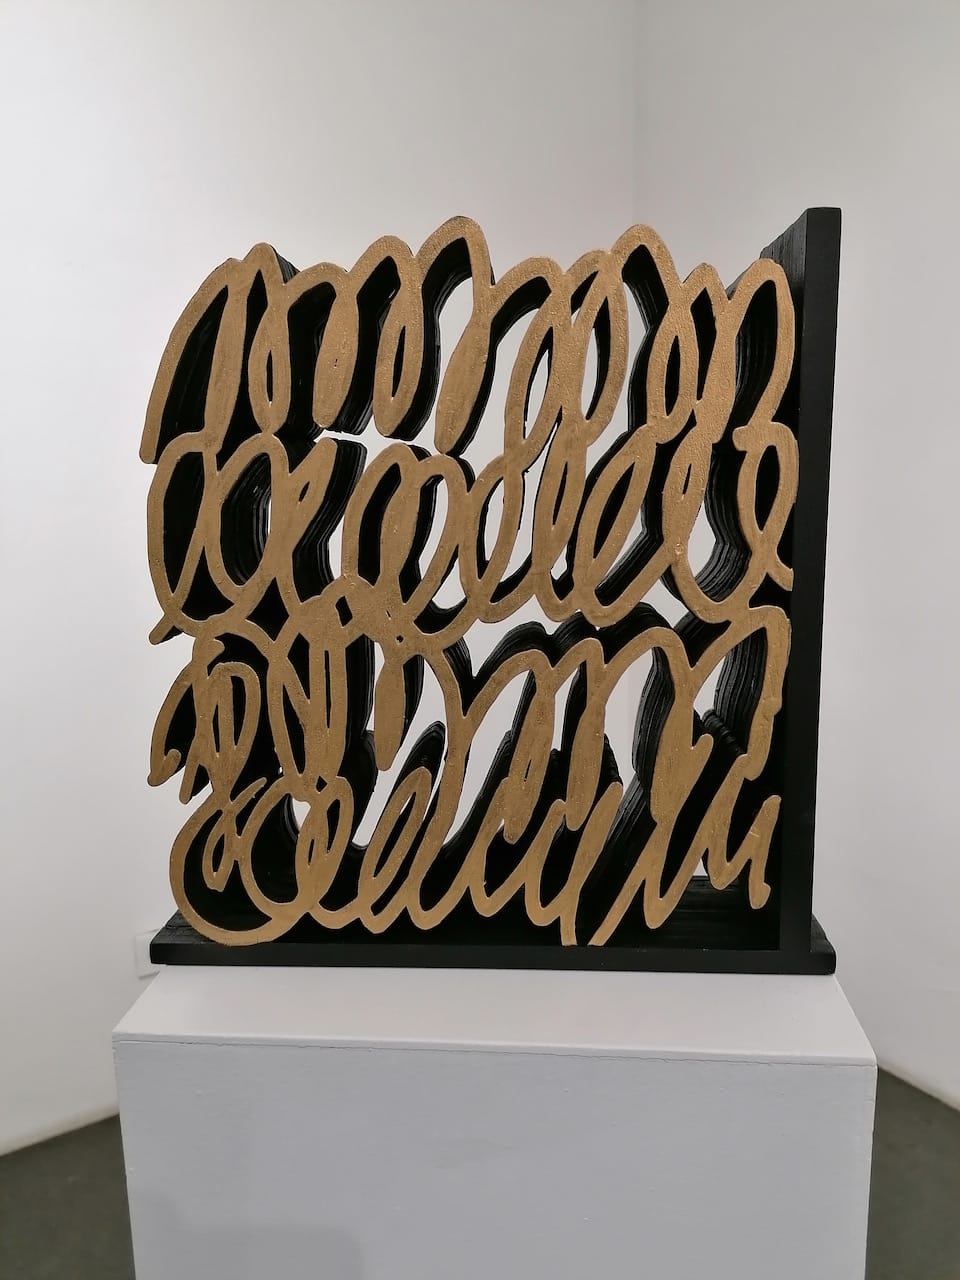 Val Wecerka 3d Typographie Skulptur Kringel Schrift auf Sockel